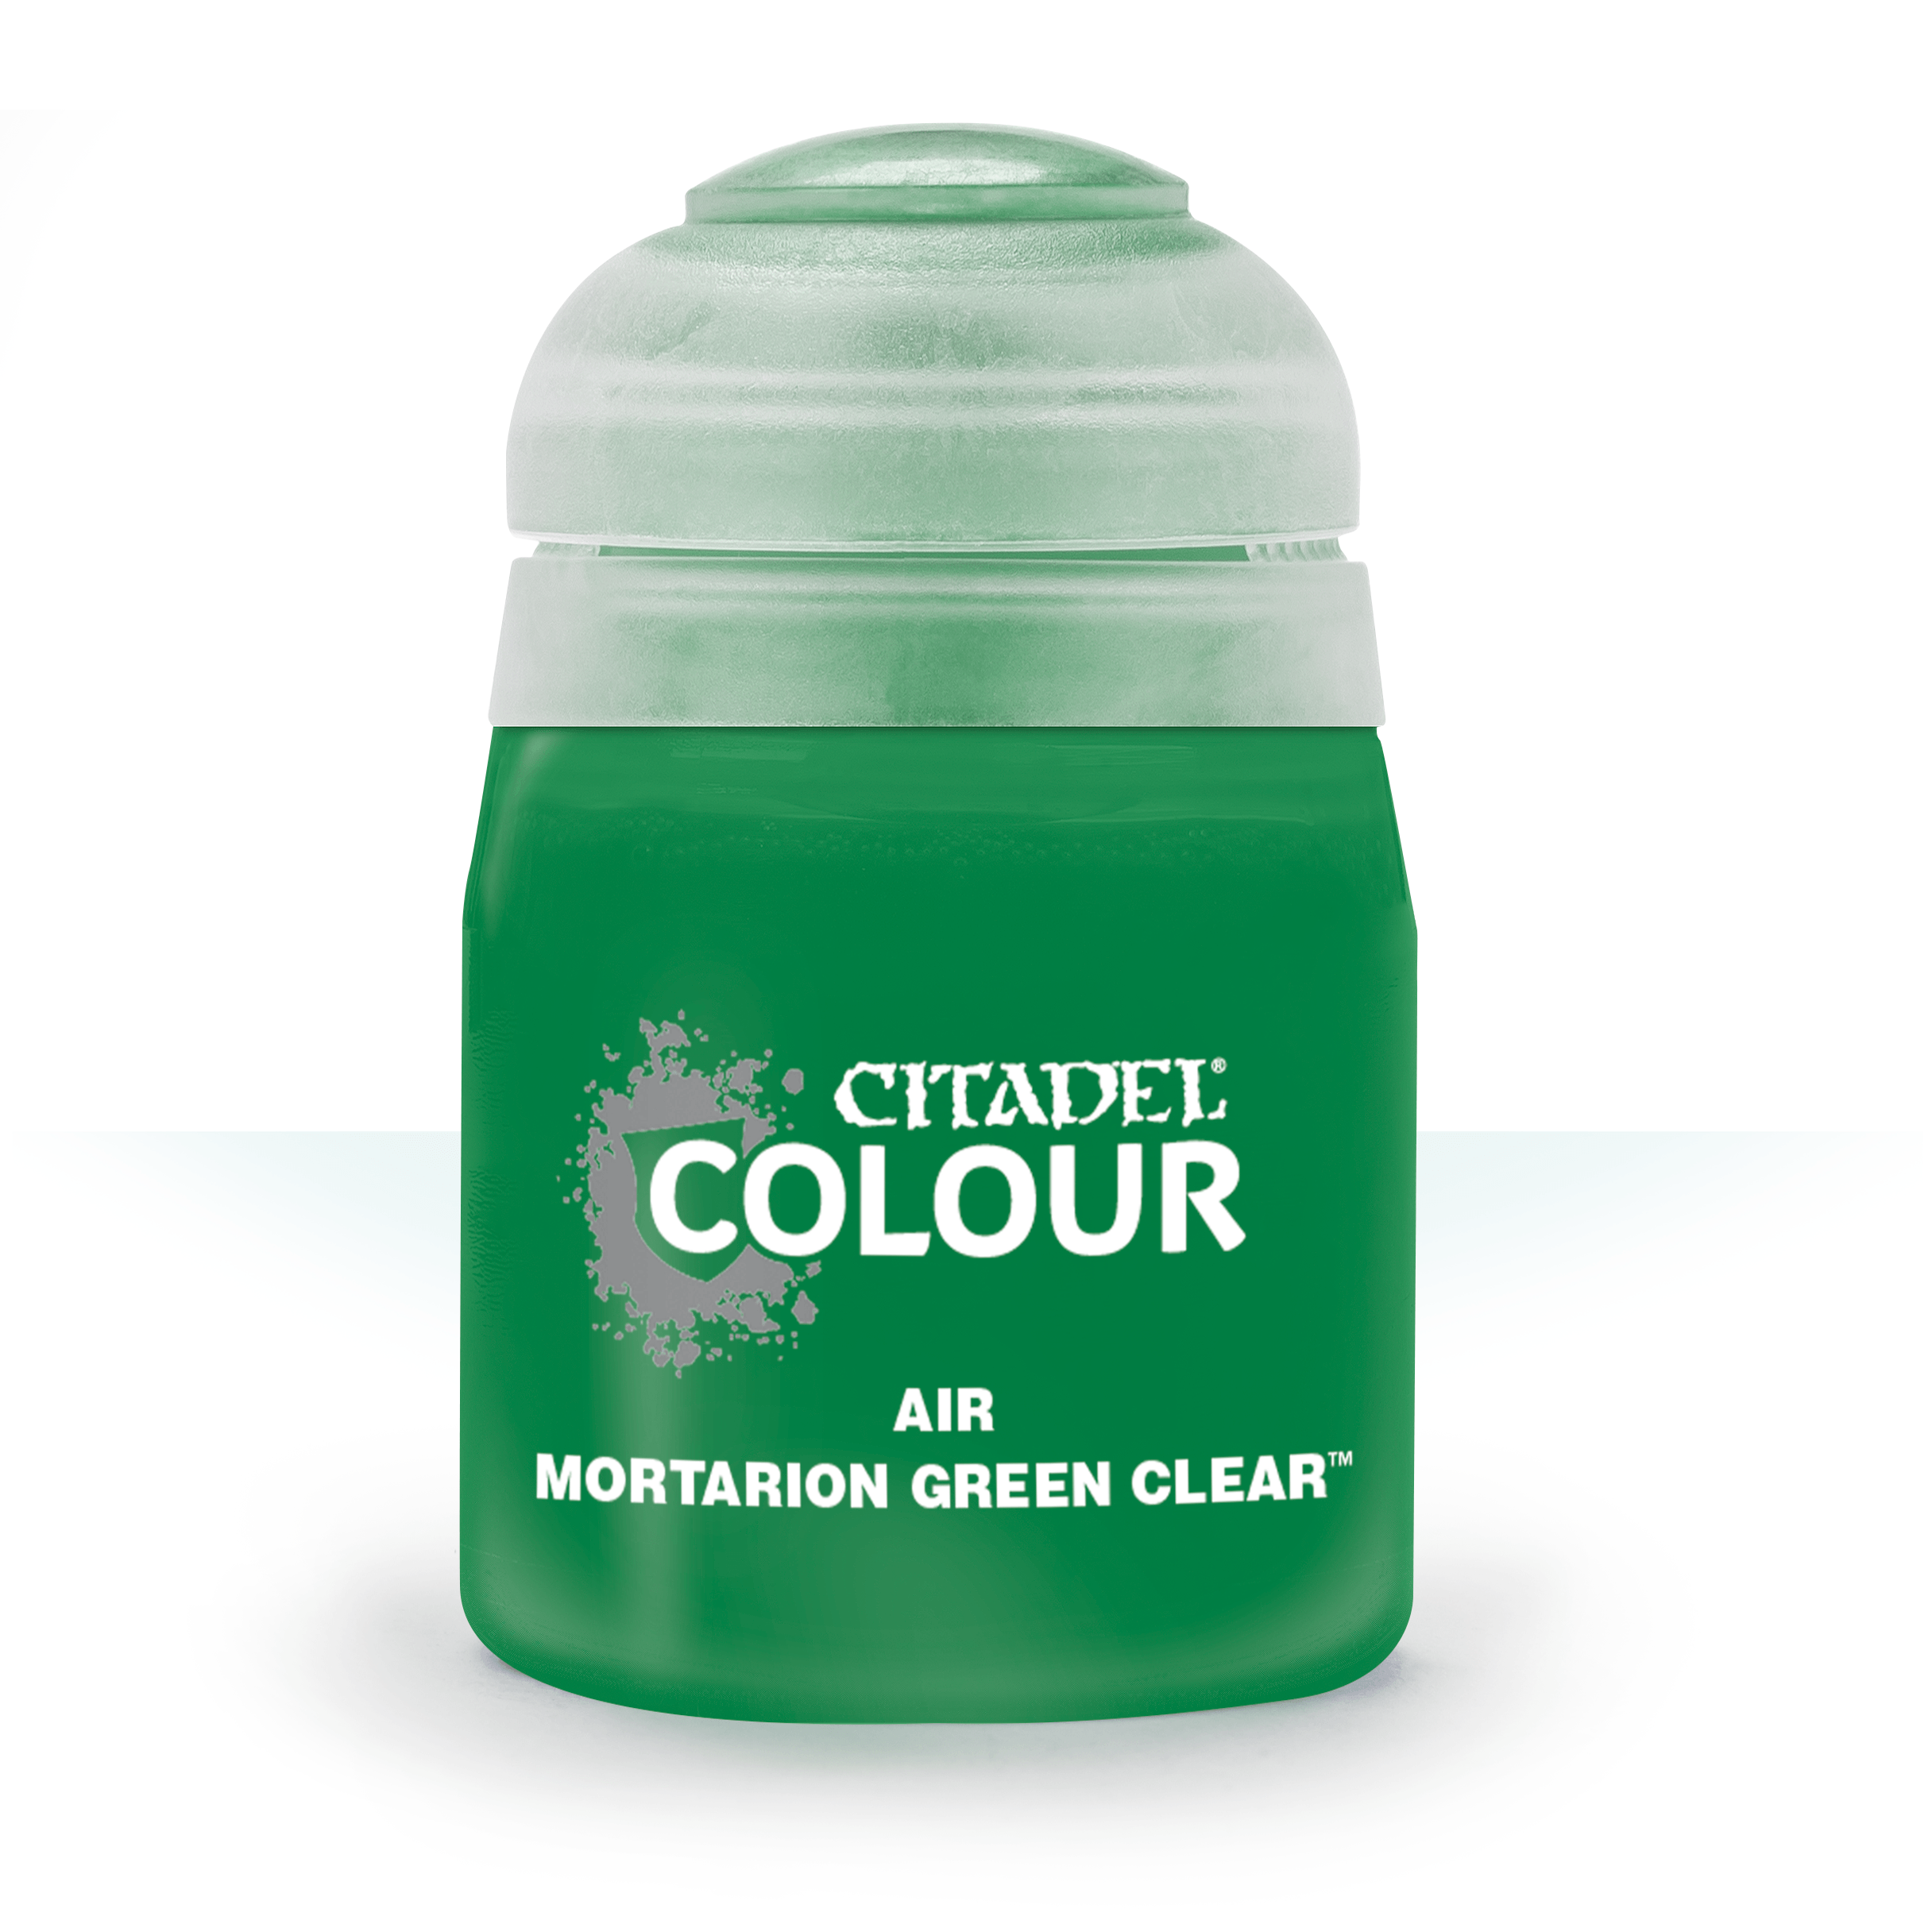 Air Mortarion Green Clear - Citadel Colour - 24 ml